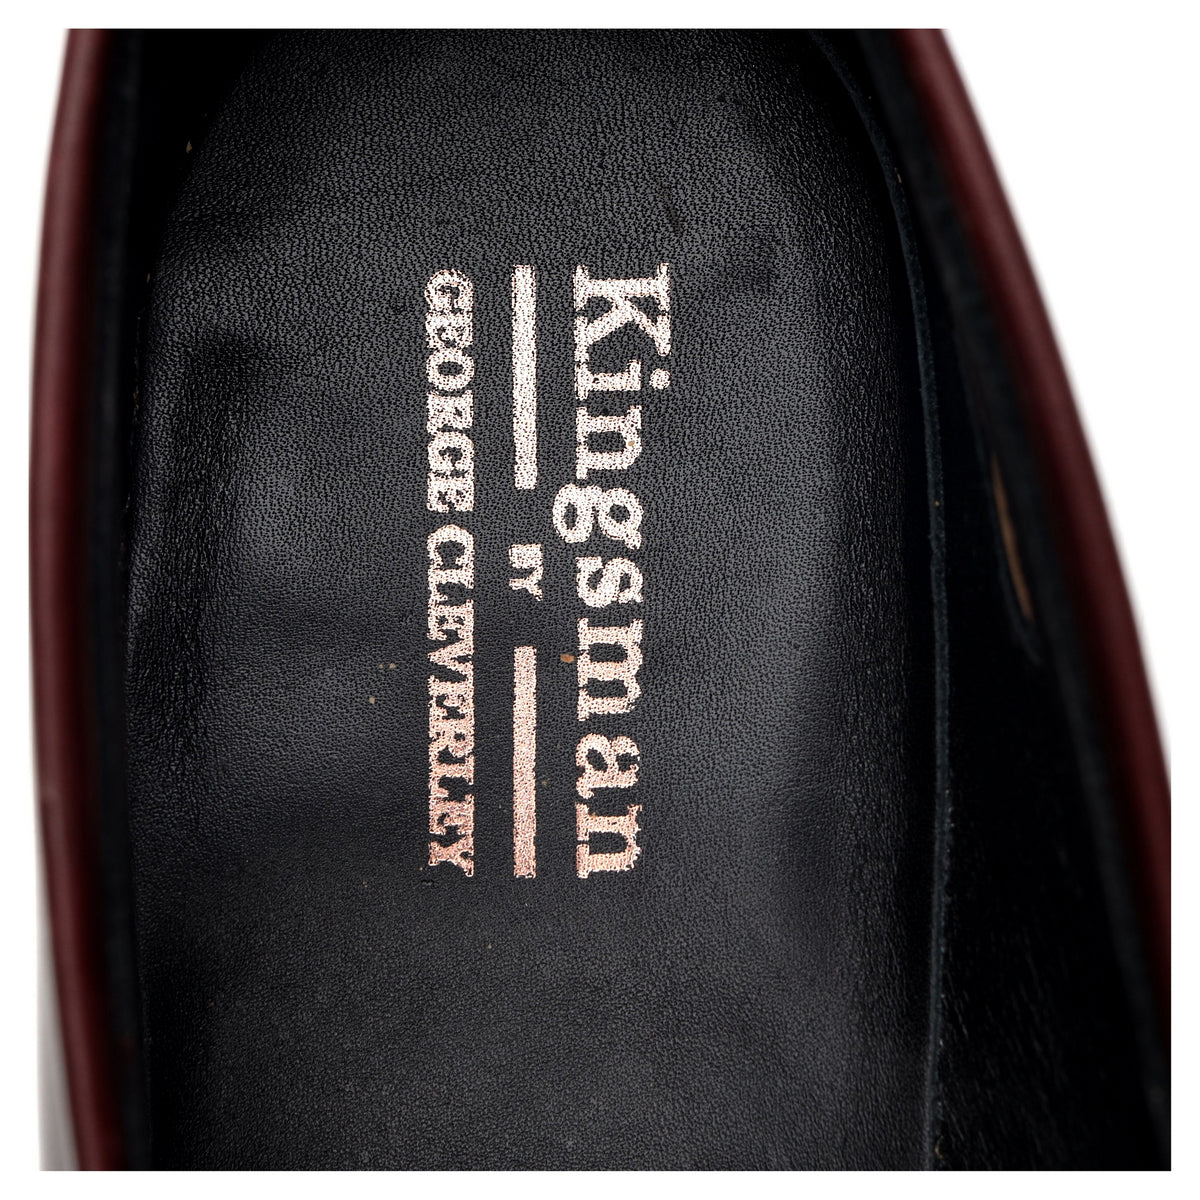 Kingsman Burgundy Apron Loafers UK 9 E